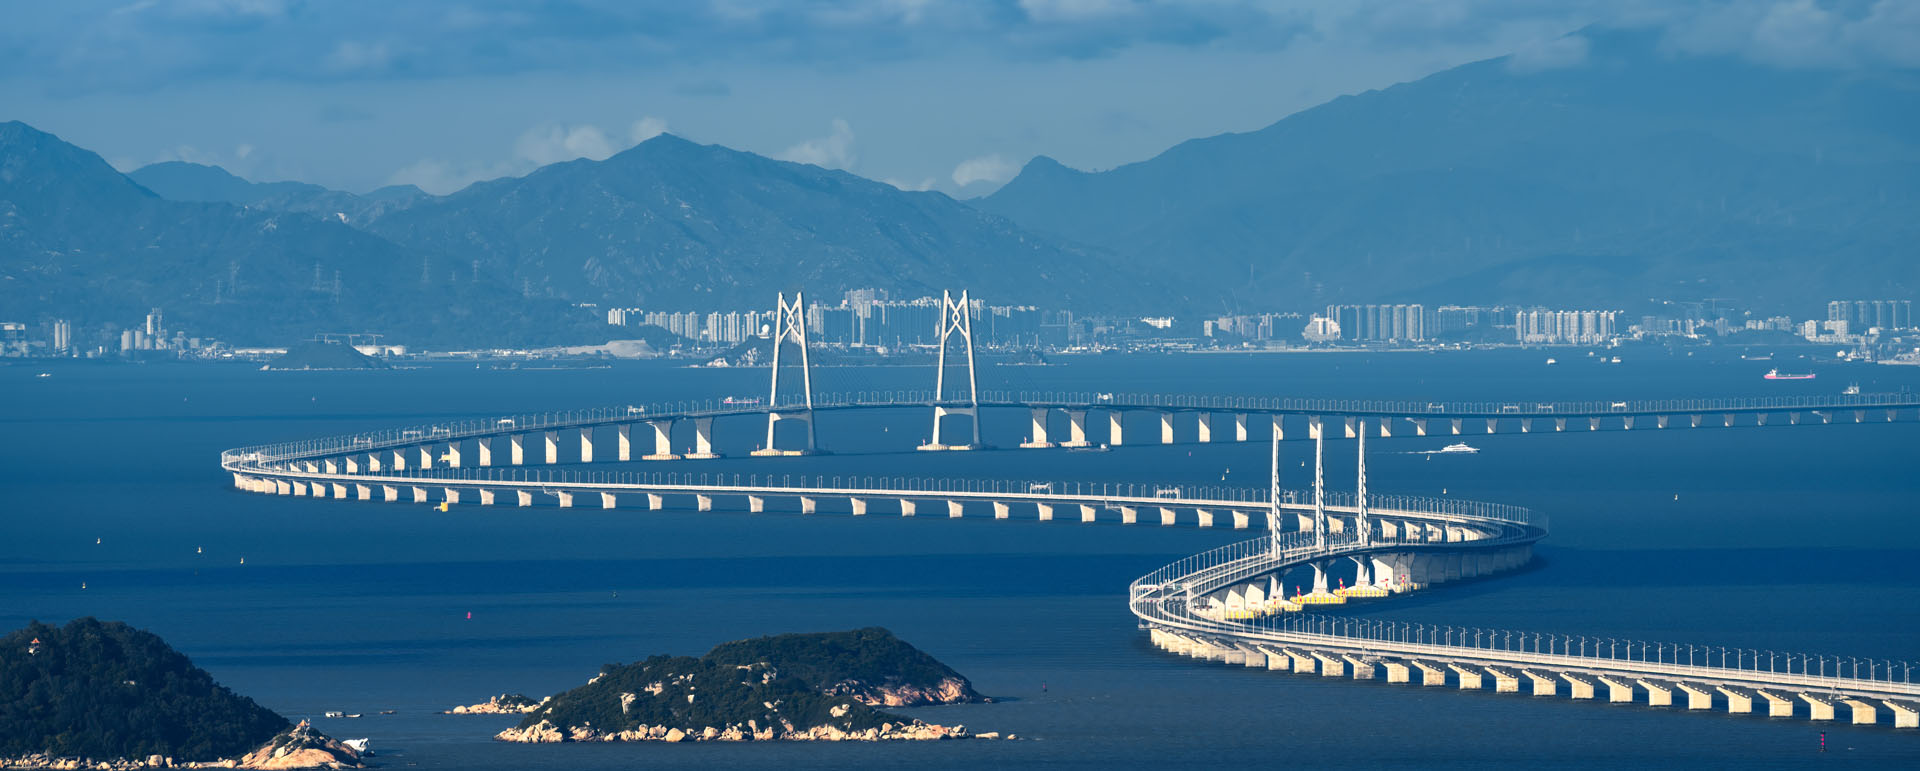 Hong Kong-Zhuhai-Macao Bridge receives over 10 mln vehicles